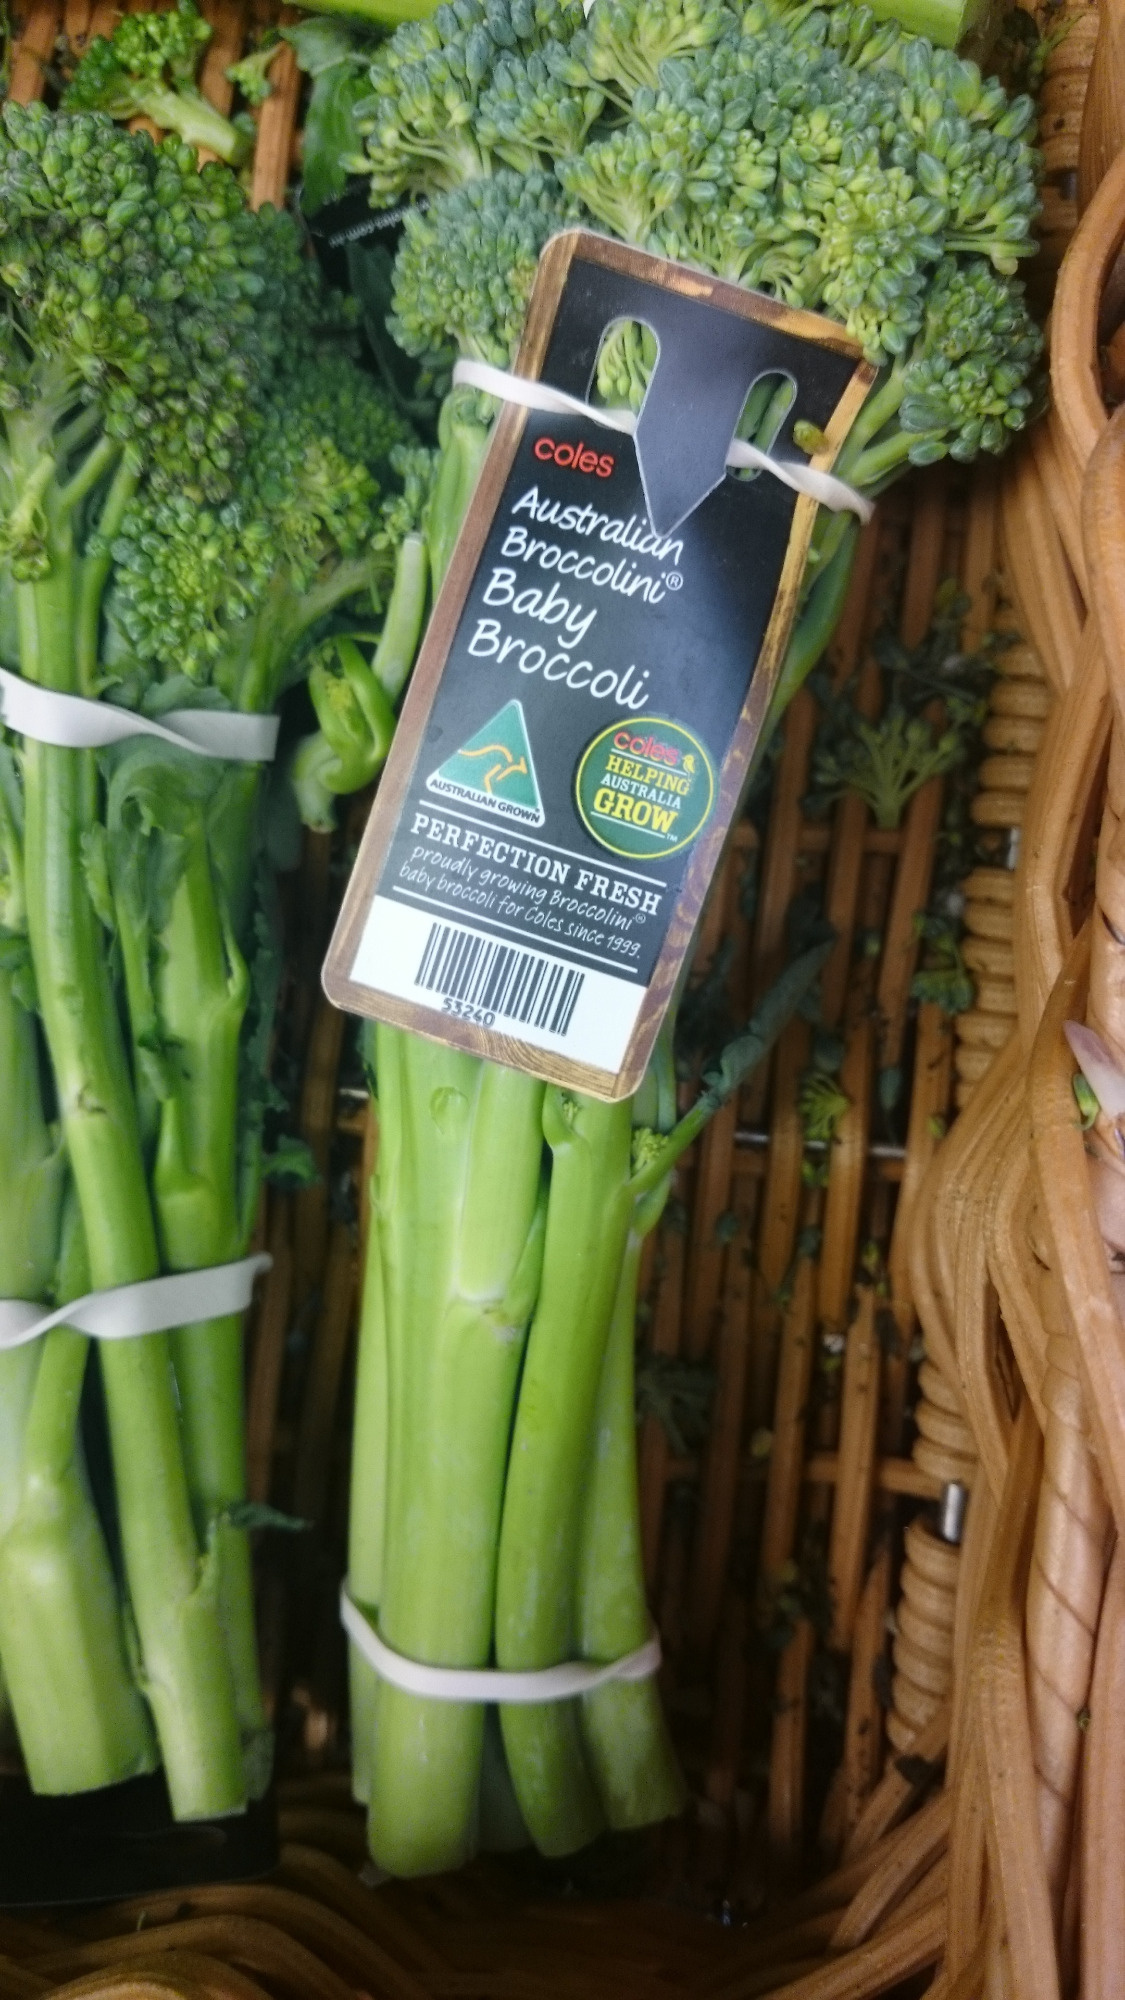 Australian  Broccolini Baby Broccoli - Product